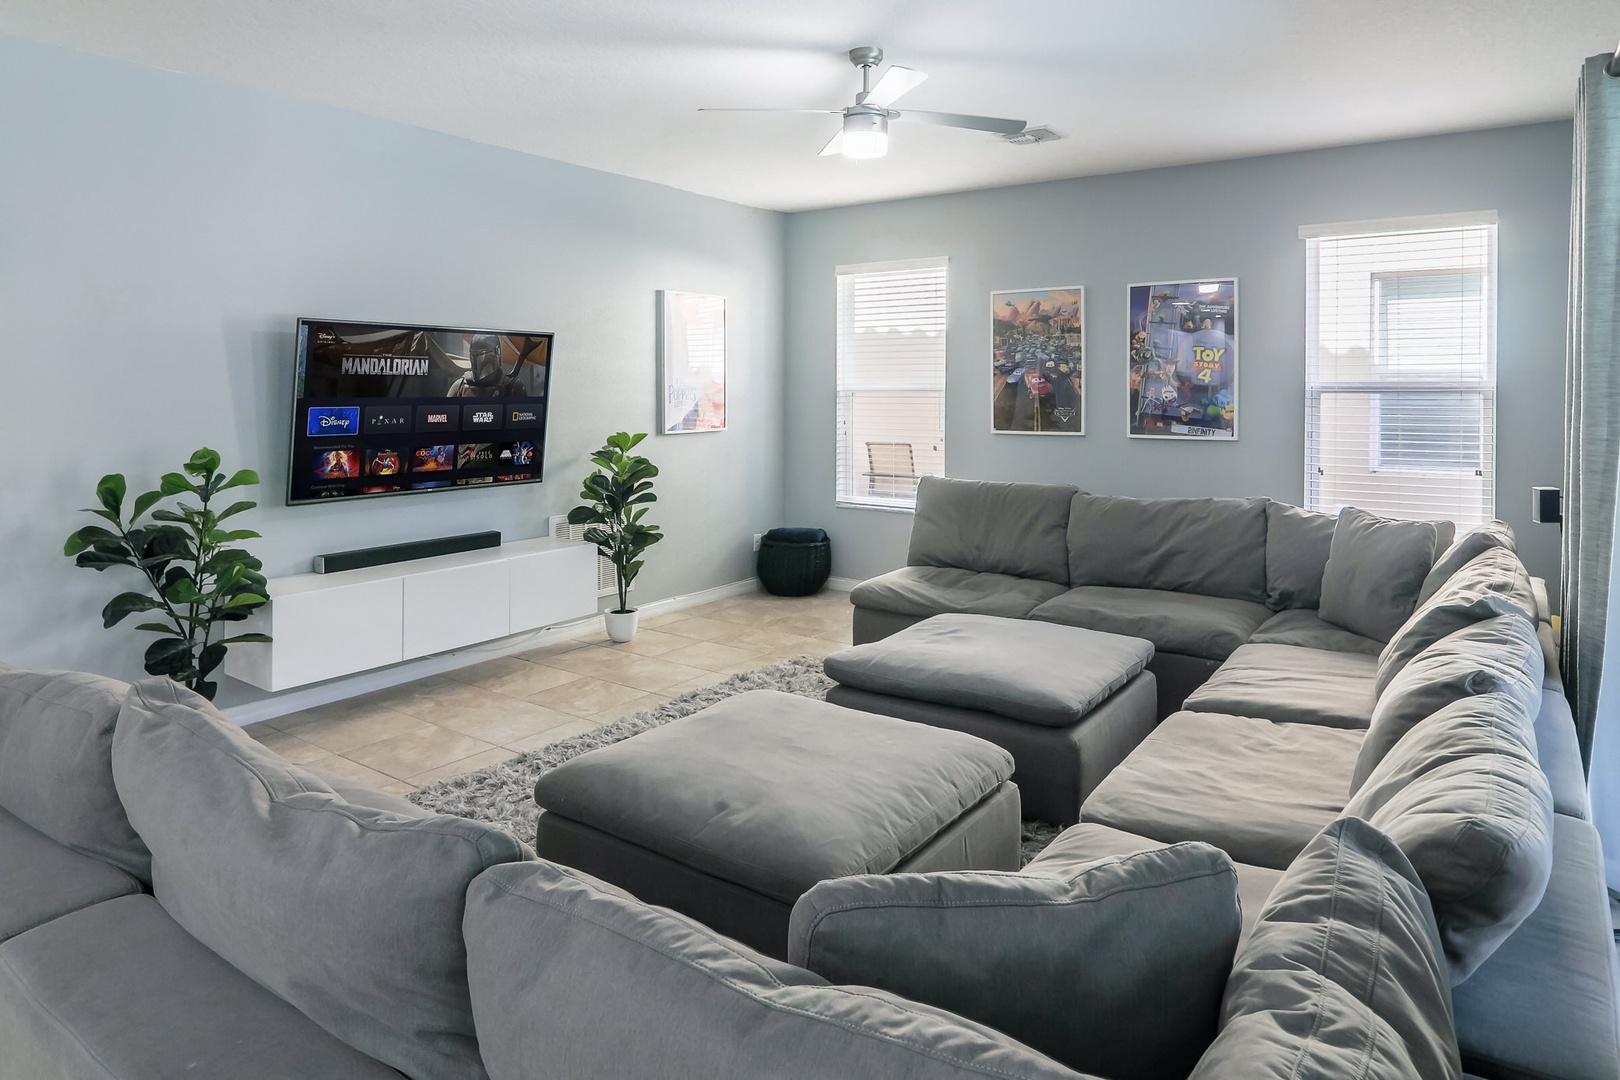 Large comfortable sofa and Smart TV